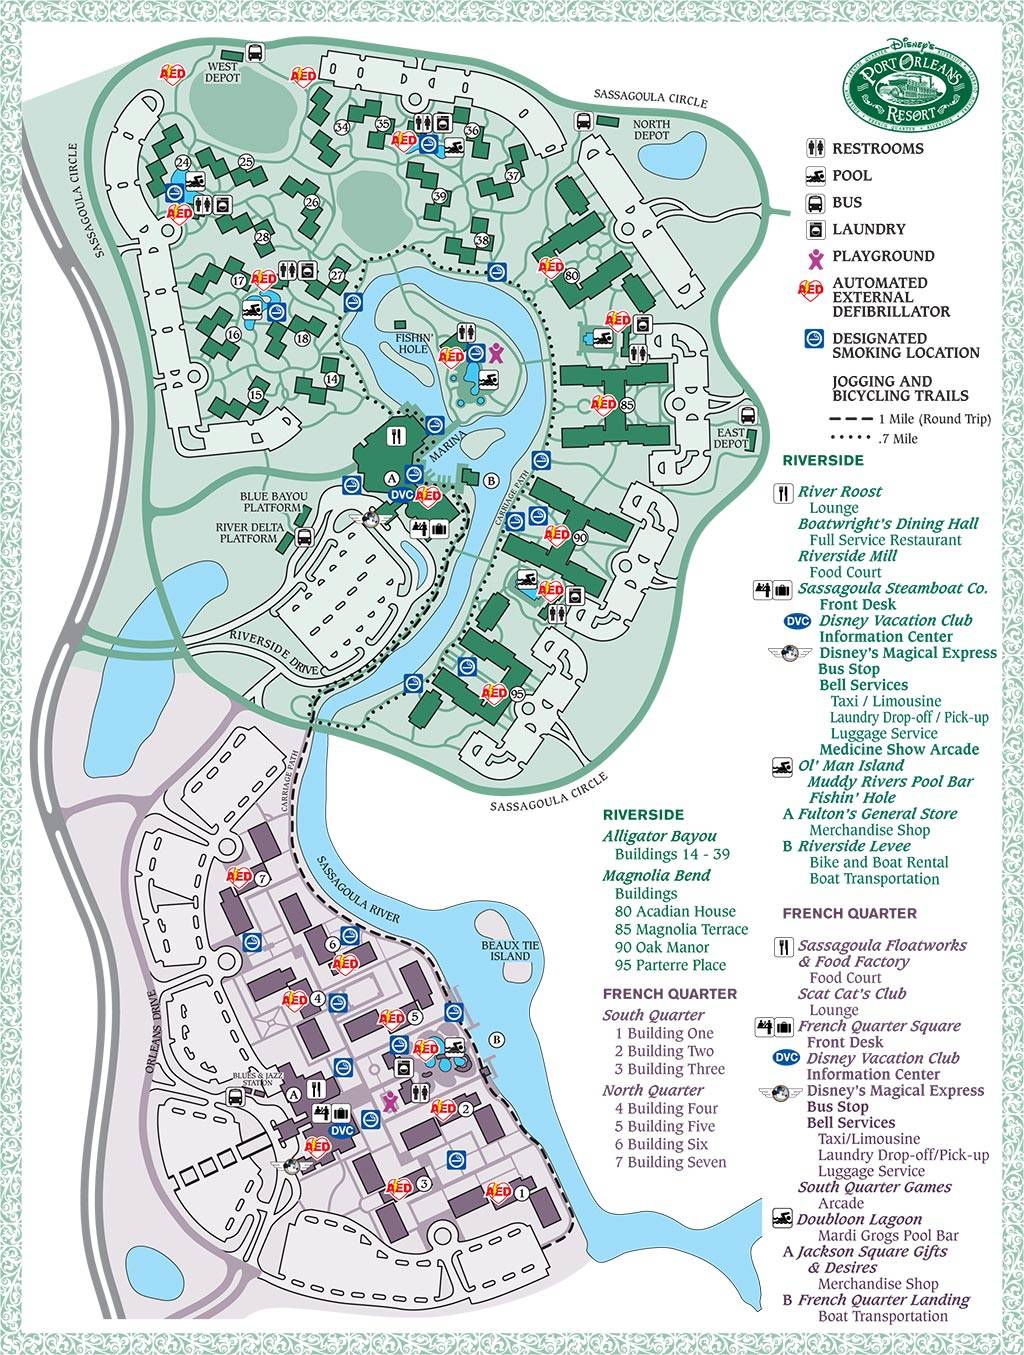 Disney's Port Orleans Resort map